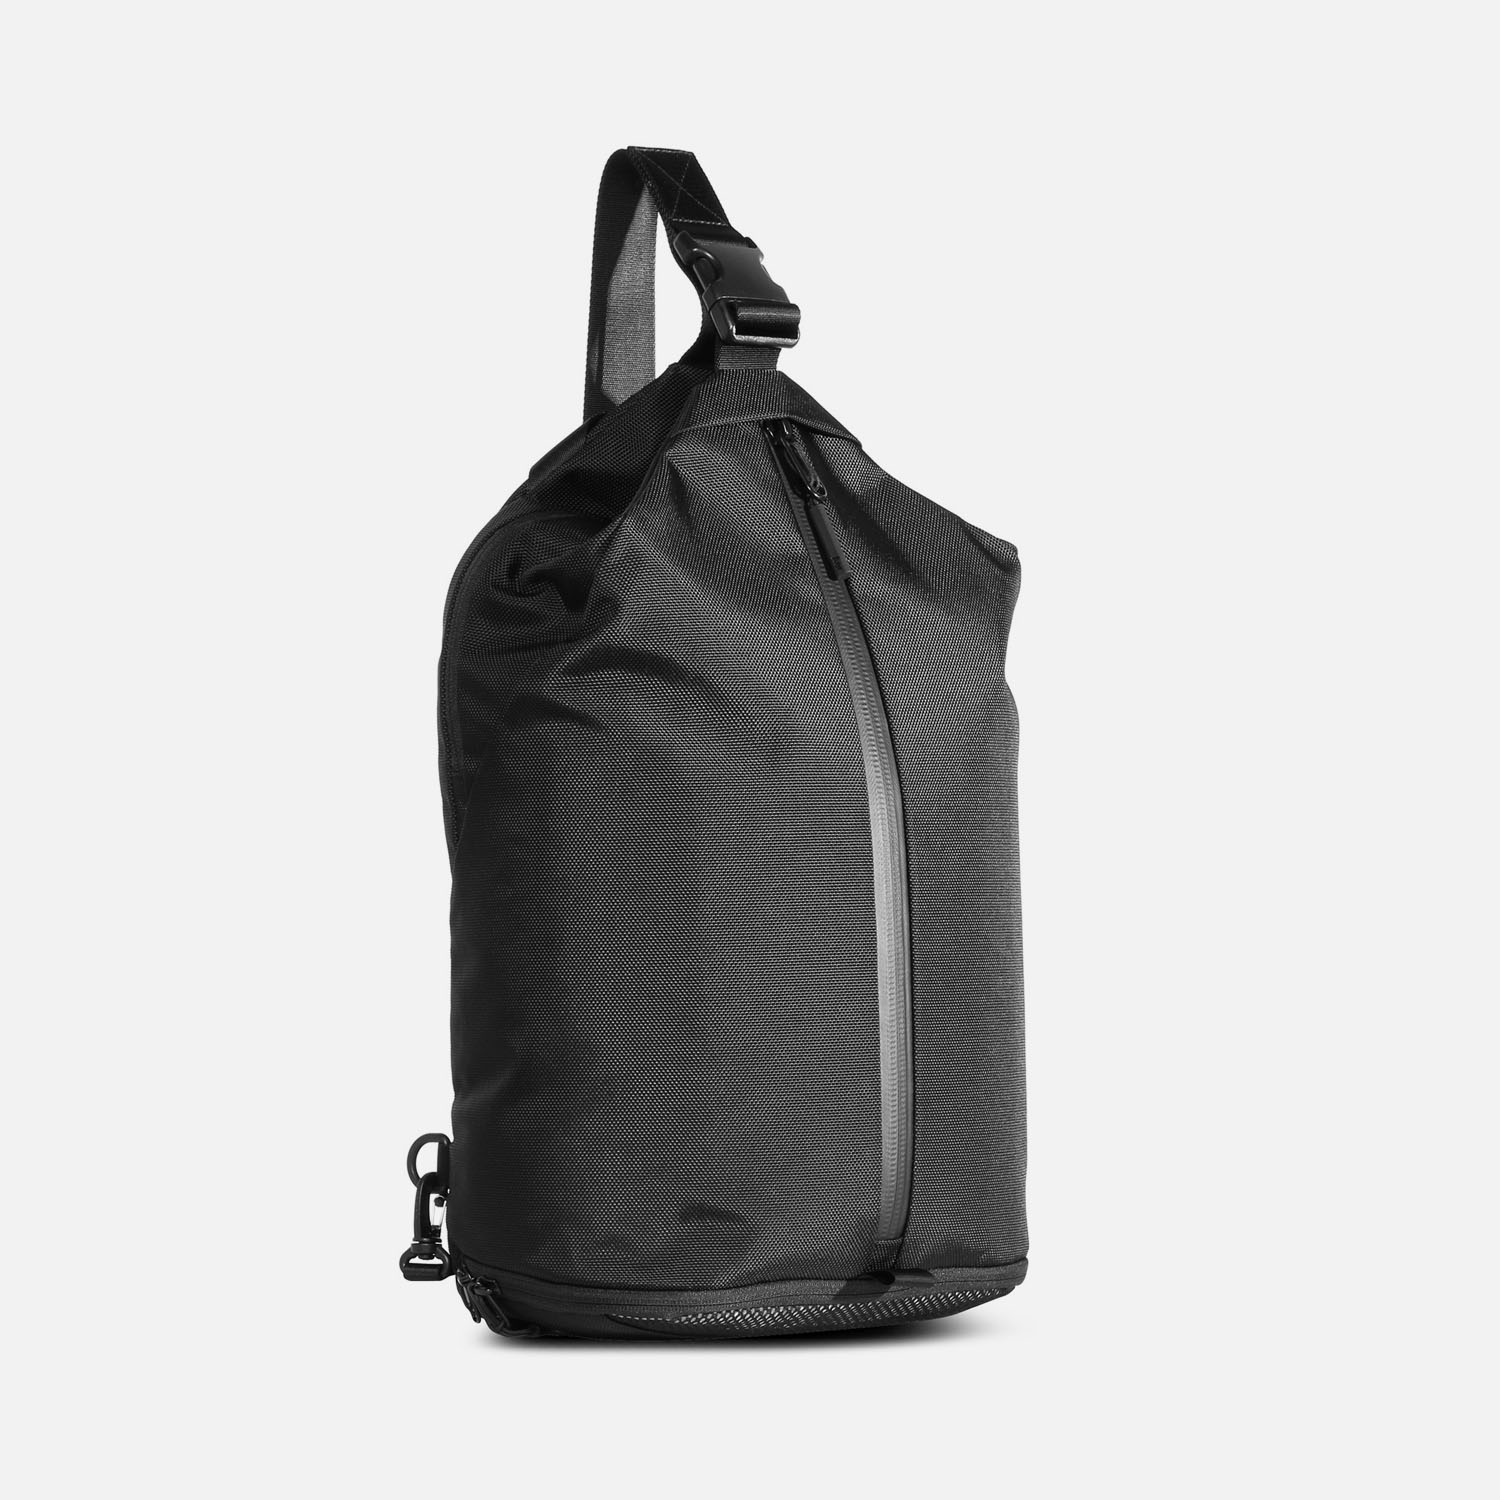 Sling Bag 2 Black Aer Modern Gym Bags Travel Backpacks And Laptop Backpacks Designed For City Travel